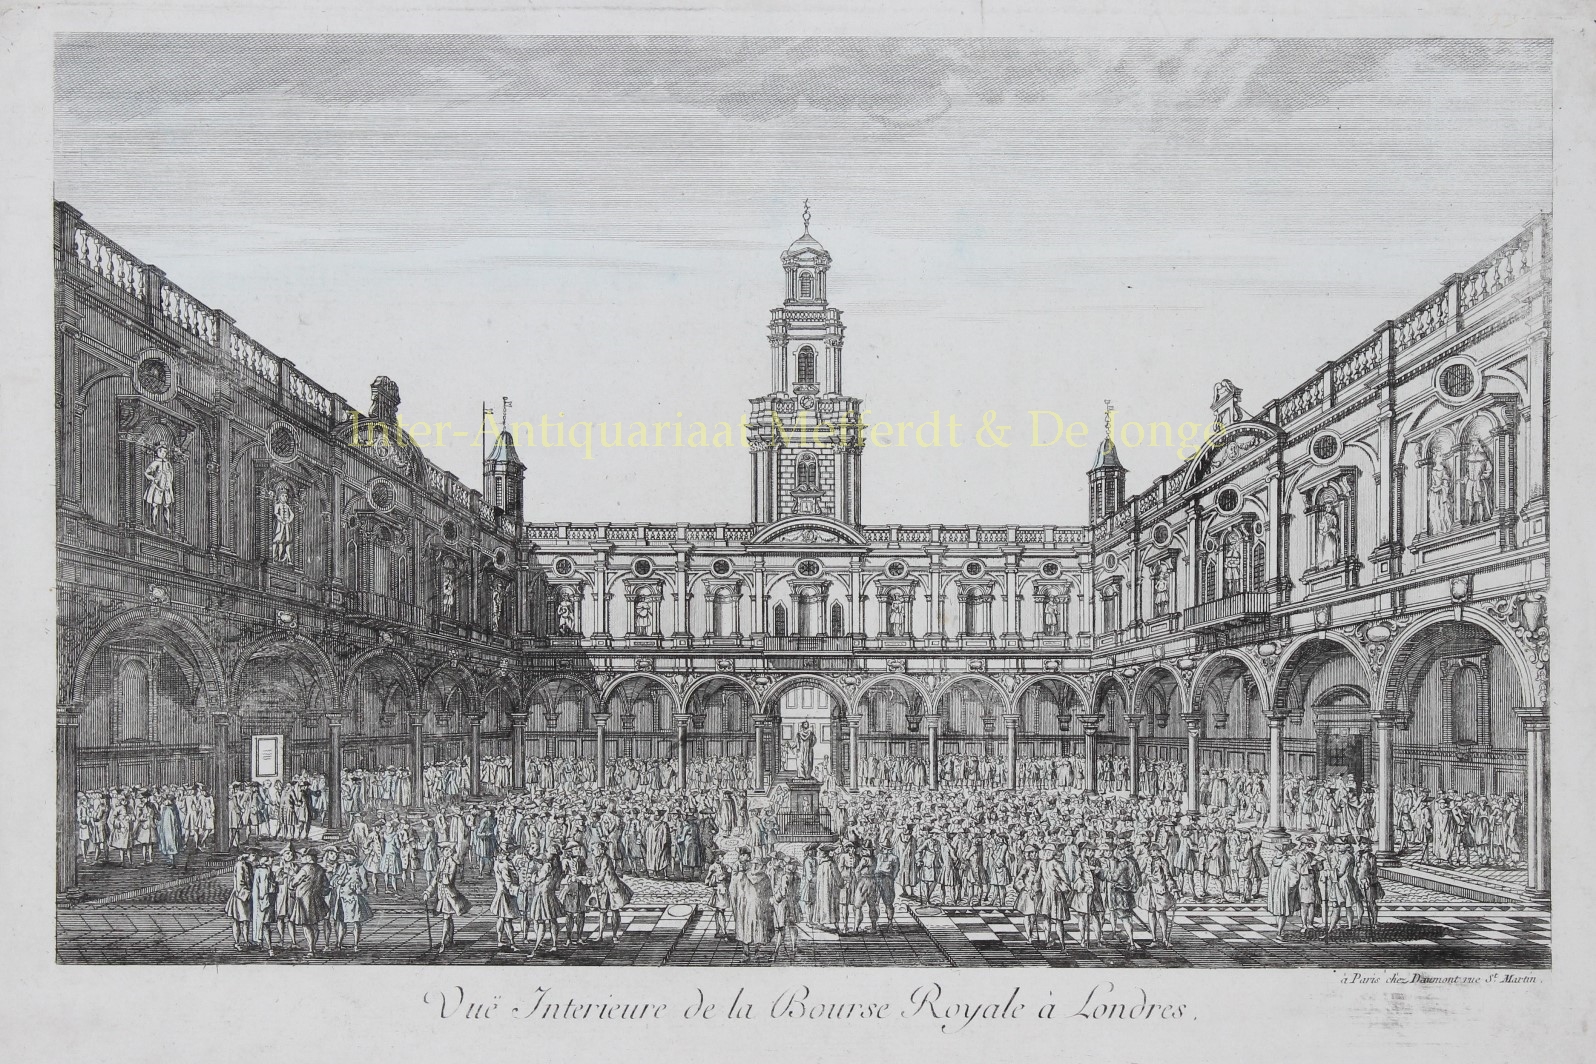  - London, Royal Exchange - Daumont, ca. 1770